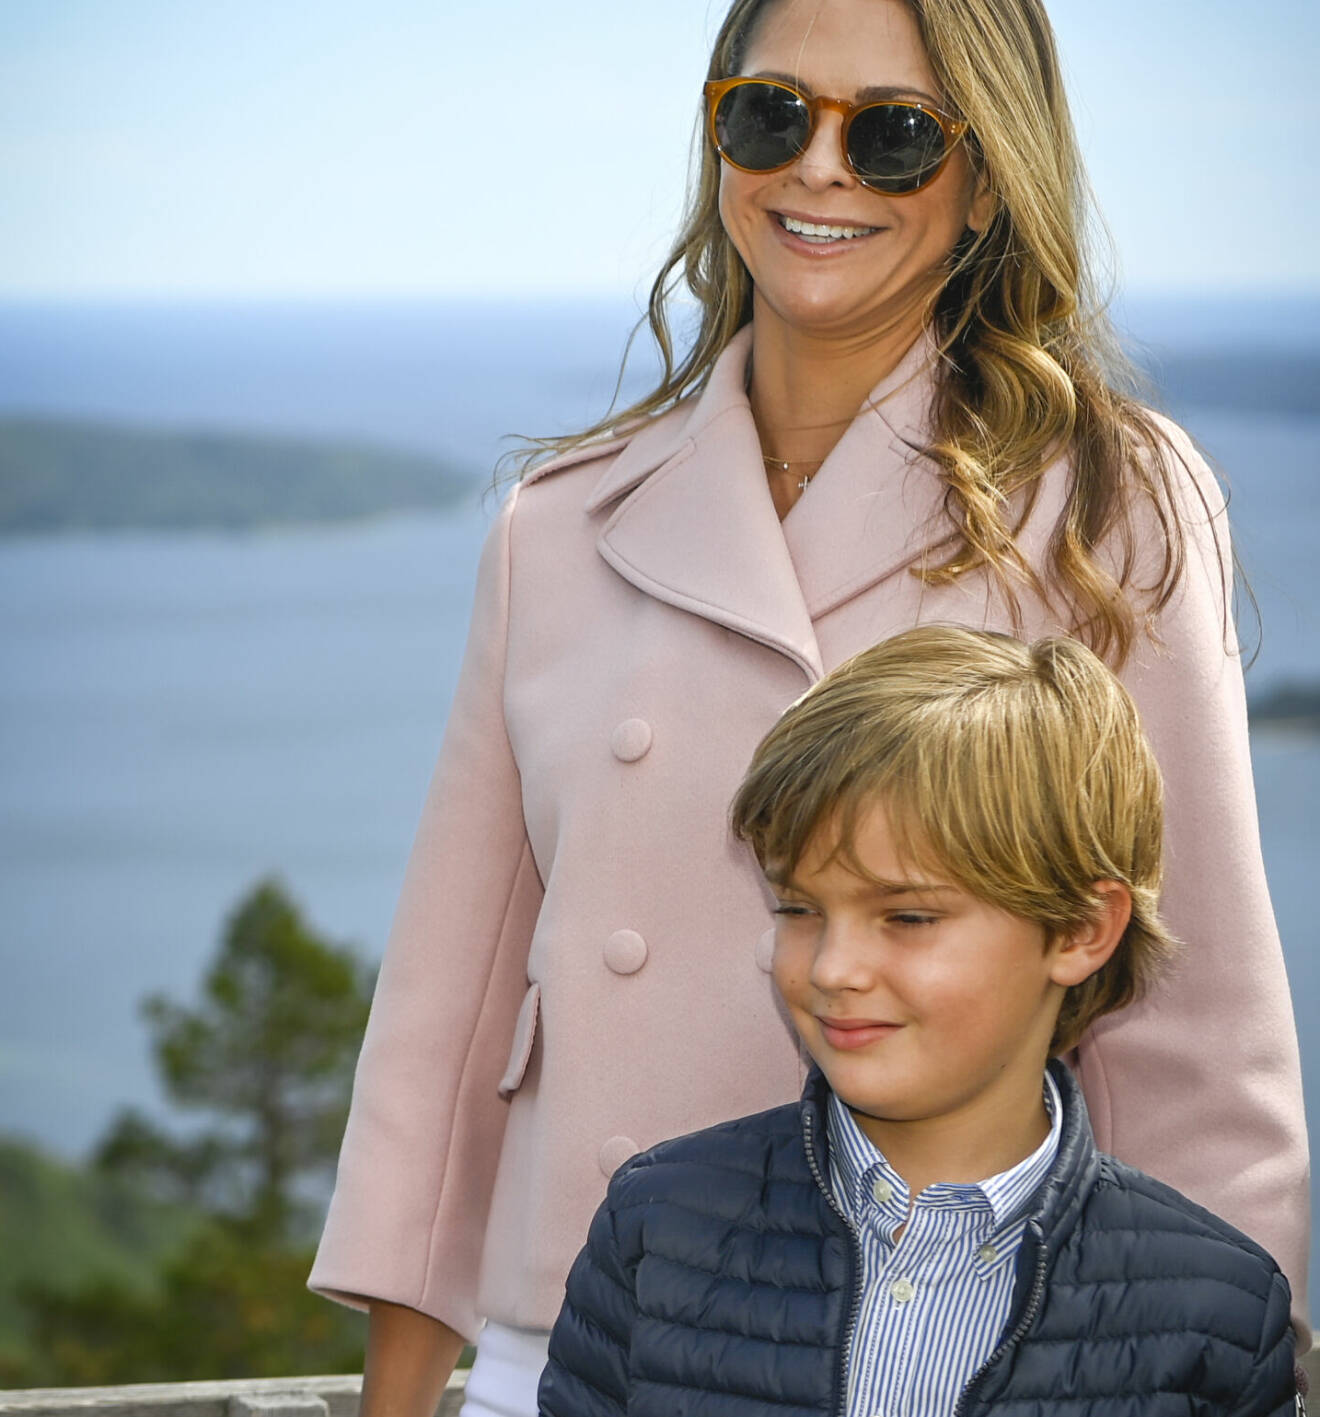 Prins Nicolas på besök i sitt hertigdöme Ångermanland med mamma prinsessan Madeleine